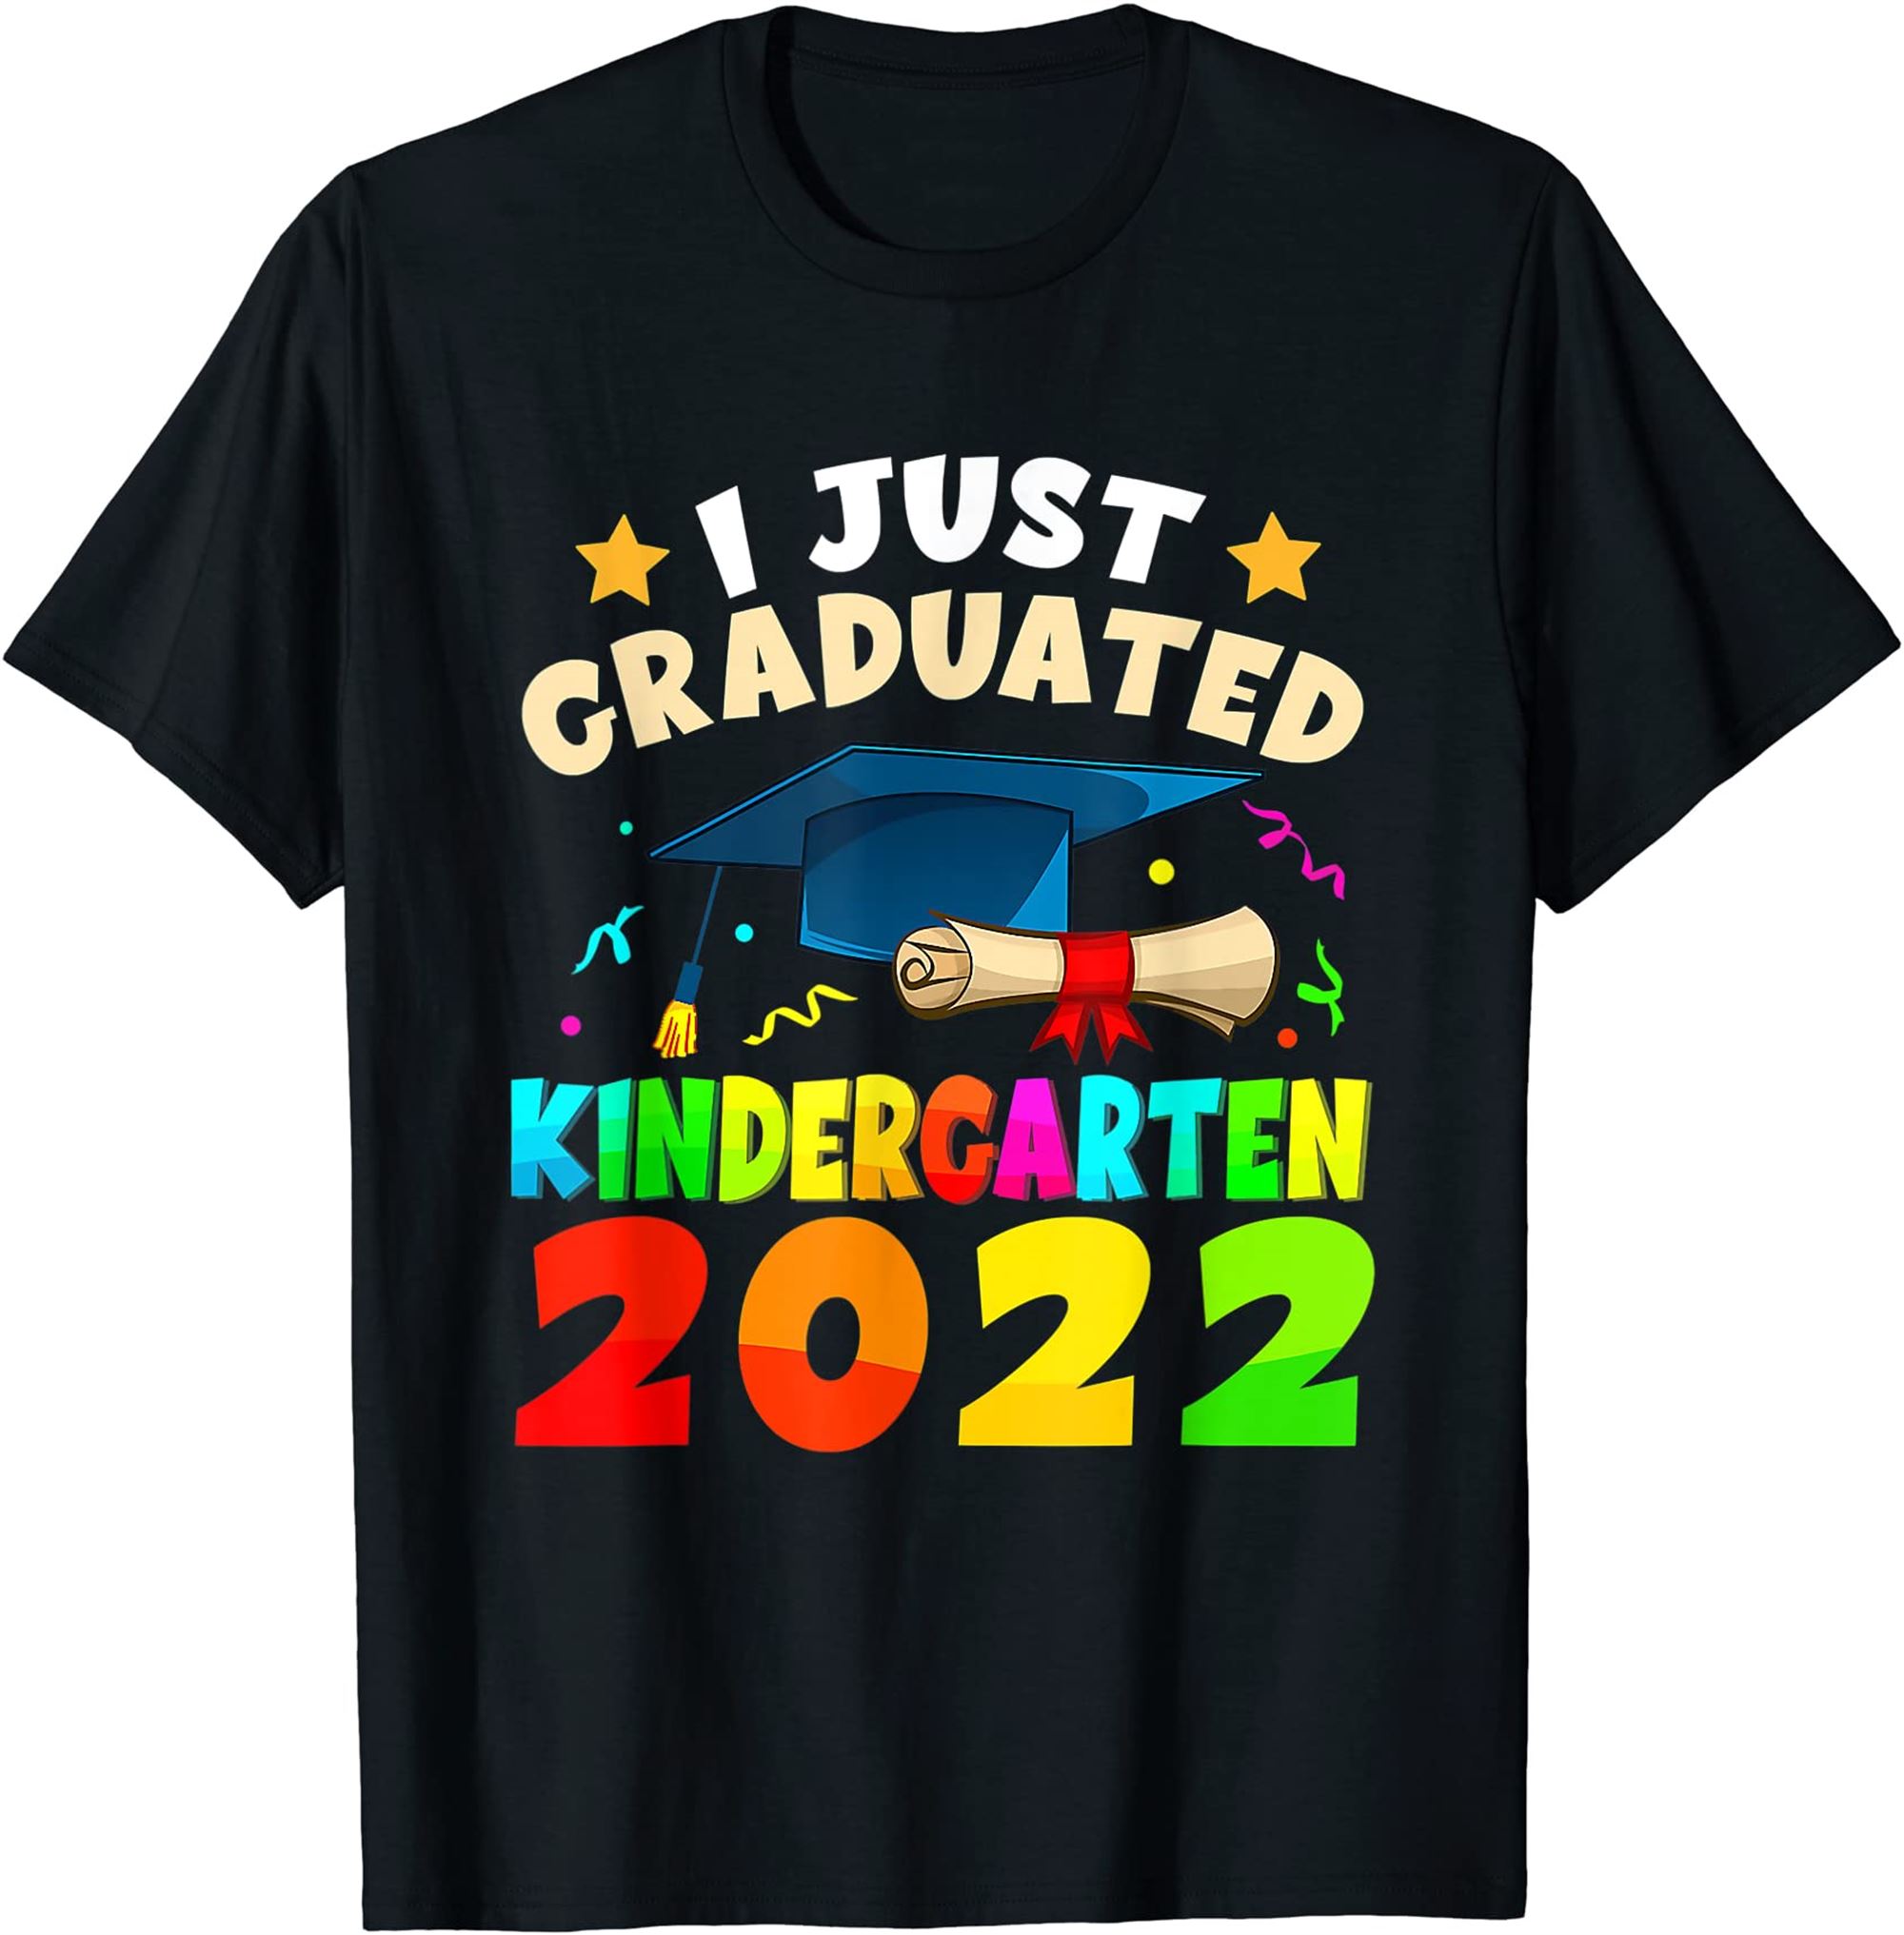 I Just Graduated Kindergarten Grade 2022 Graduation T-shirt Full Size Up To 5xl